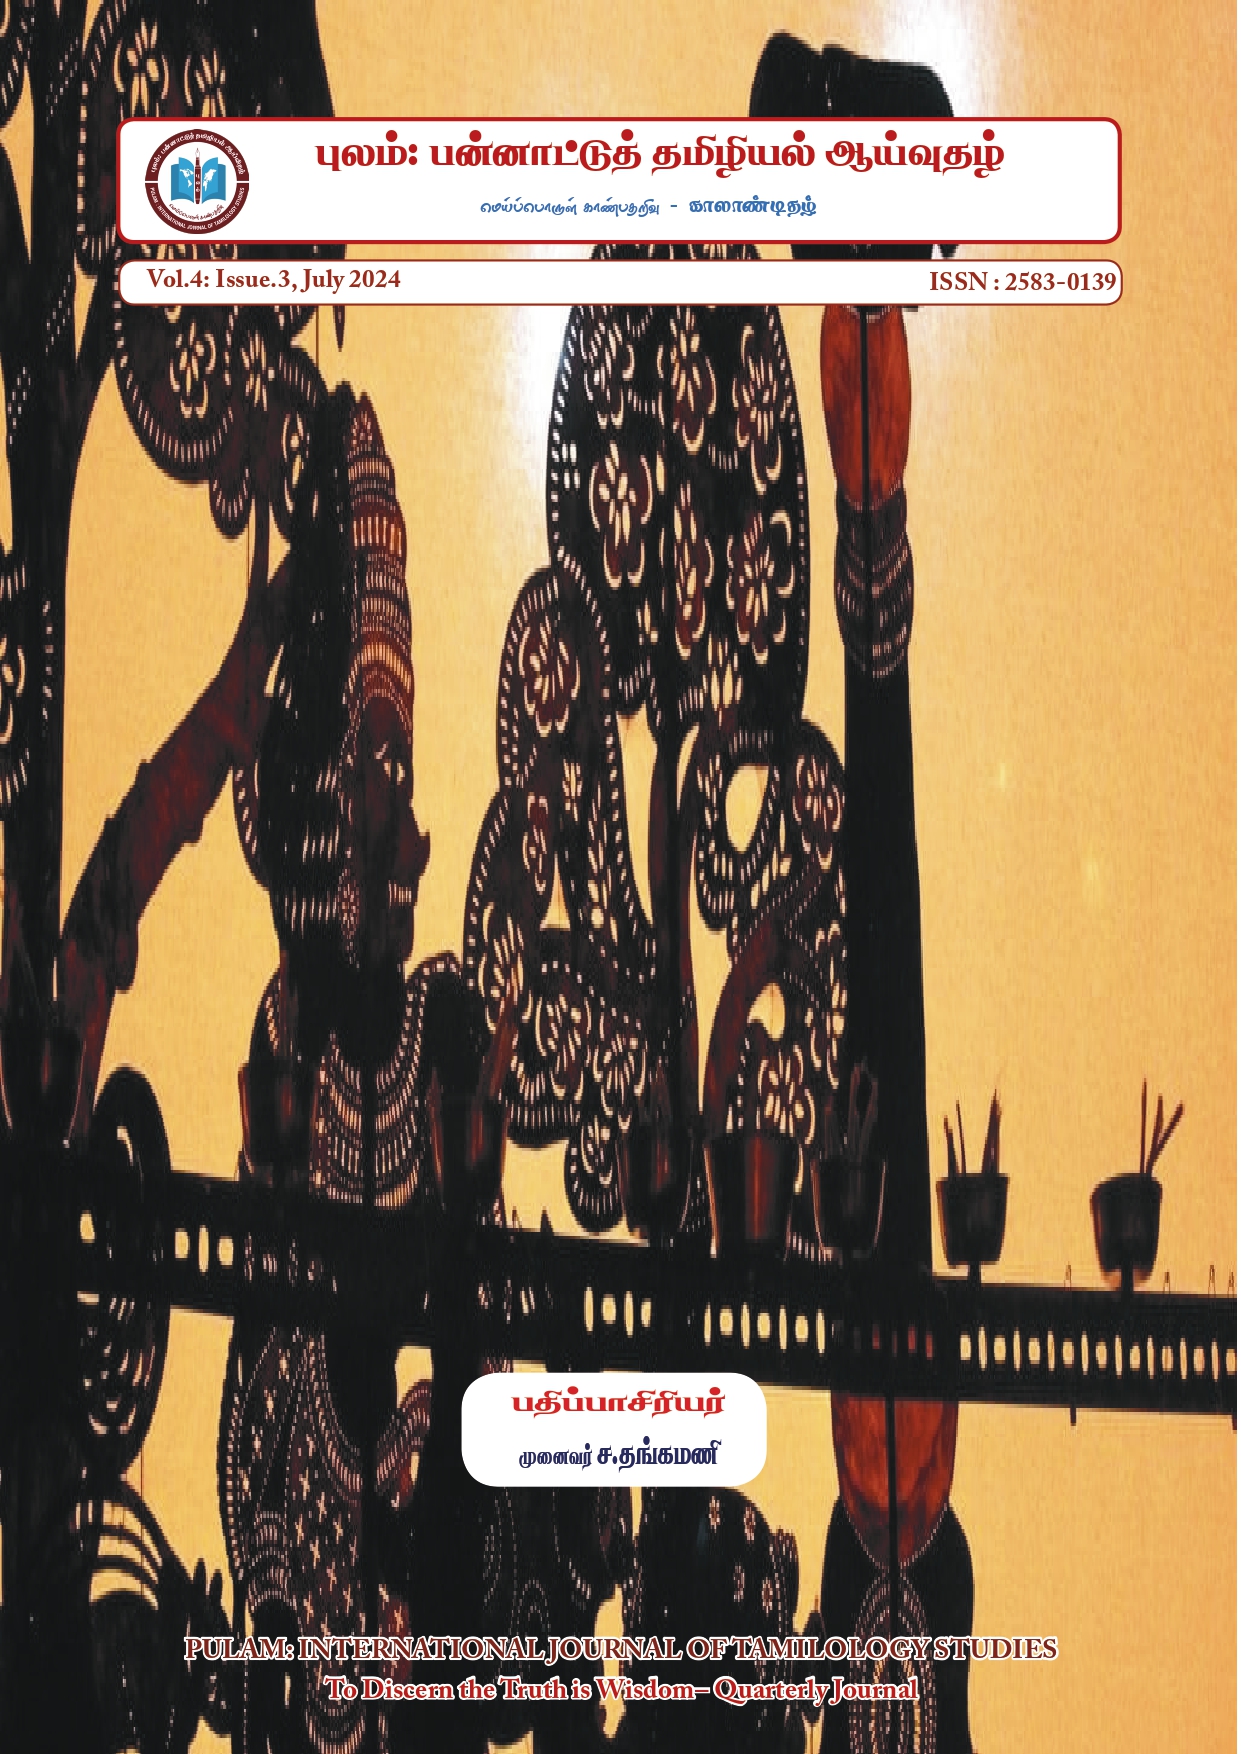 					View VOL 4, ISSUE 3 (JULY - 2024) PULAM: INTERNATIONAL JOURNAL OF TAMILOLOGY STUDIES (புலம் : பன்னாட்டுத் தமிழியல் ஆய்விதழ்)
				